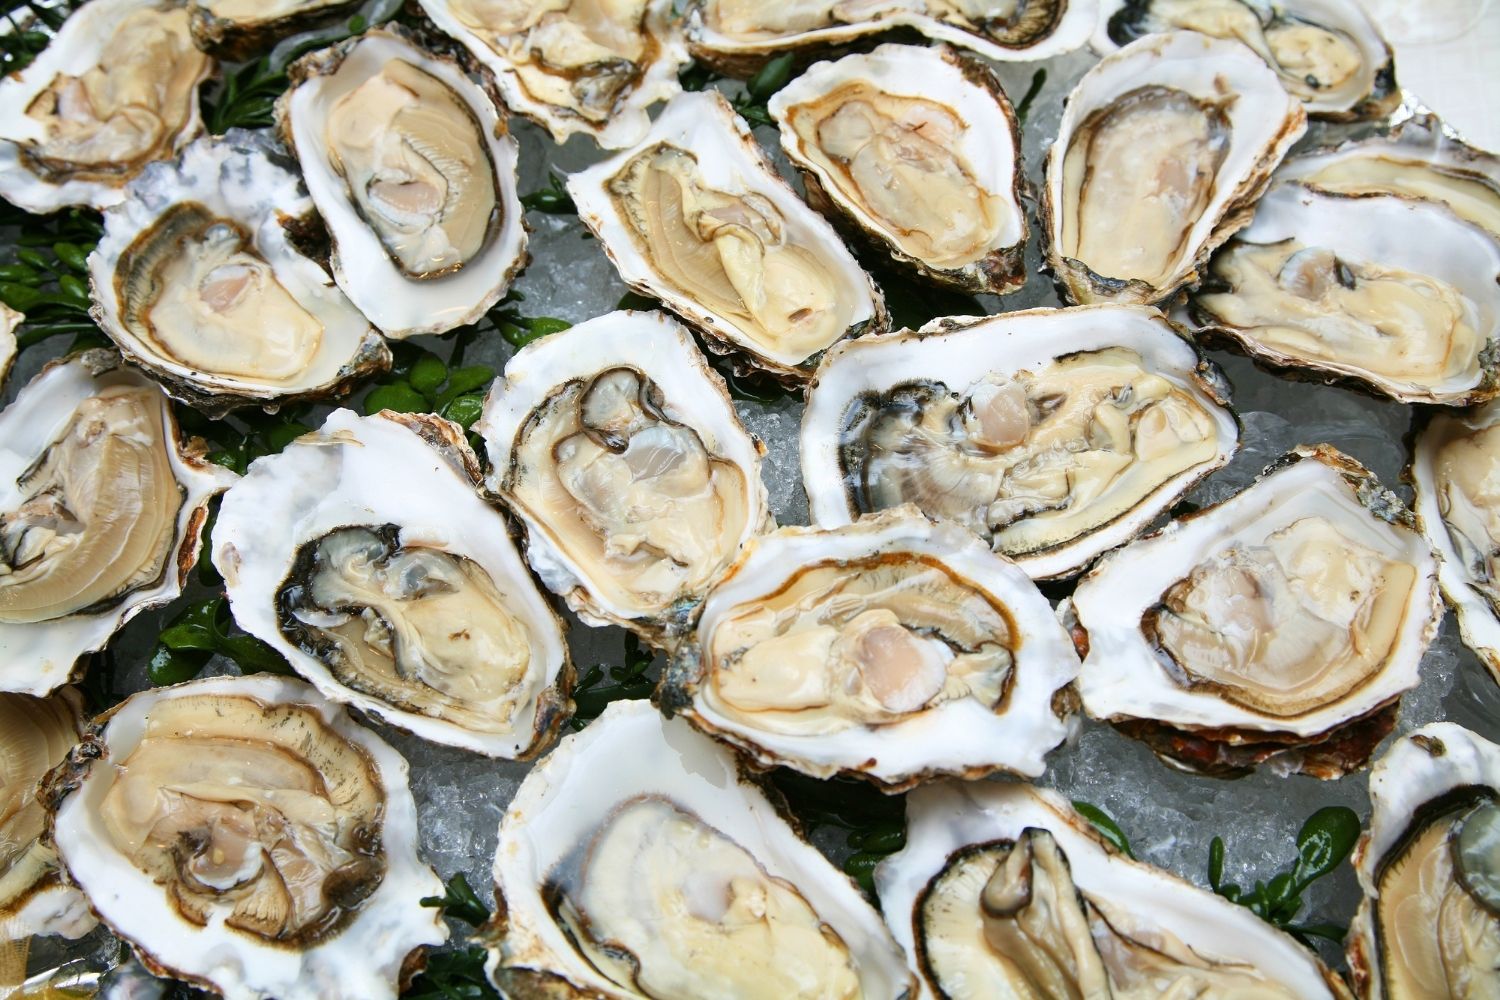 Fresh Shucked Oysters on Ice - hilton head restaurants 